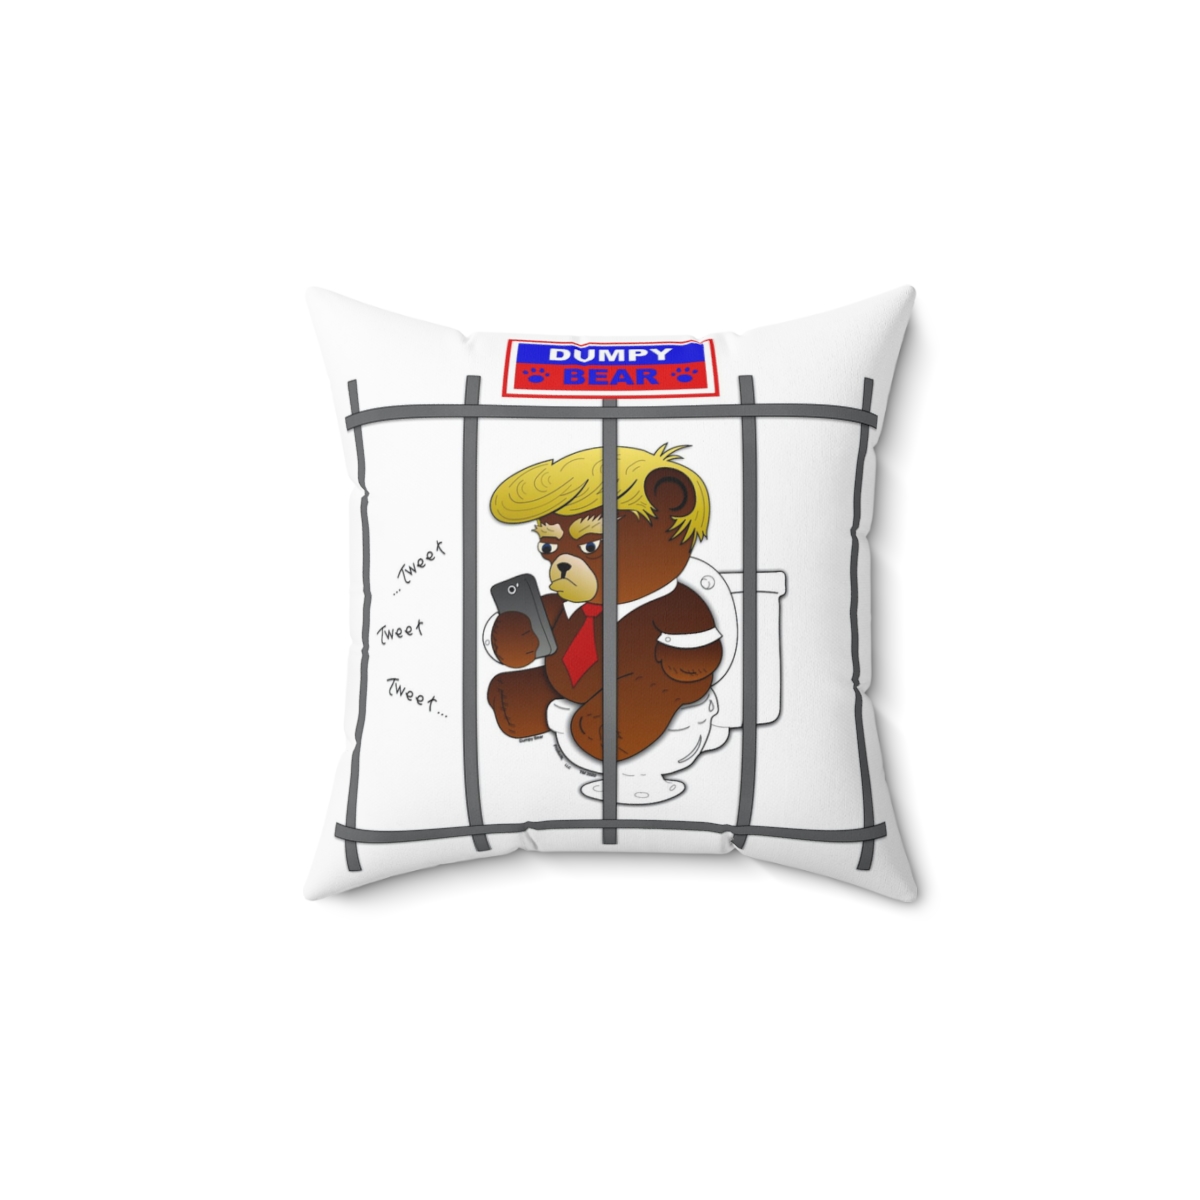 Dumpy Bear Tweeting on Toilet Behind Bars - Spun Polyester Square Pillow product thumbnail image